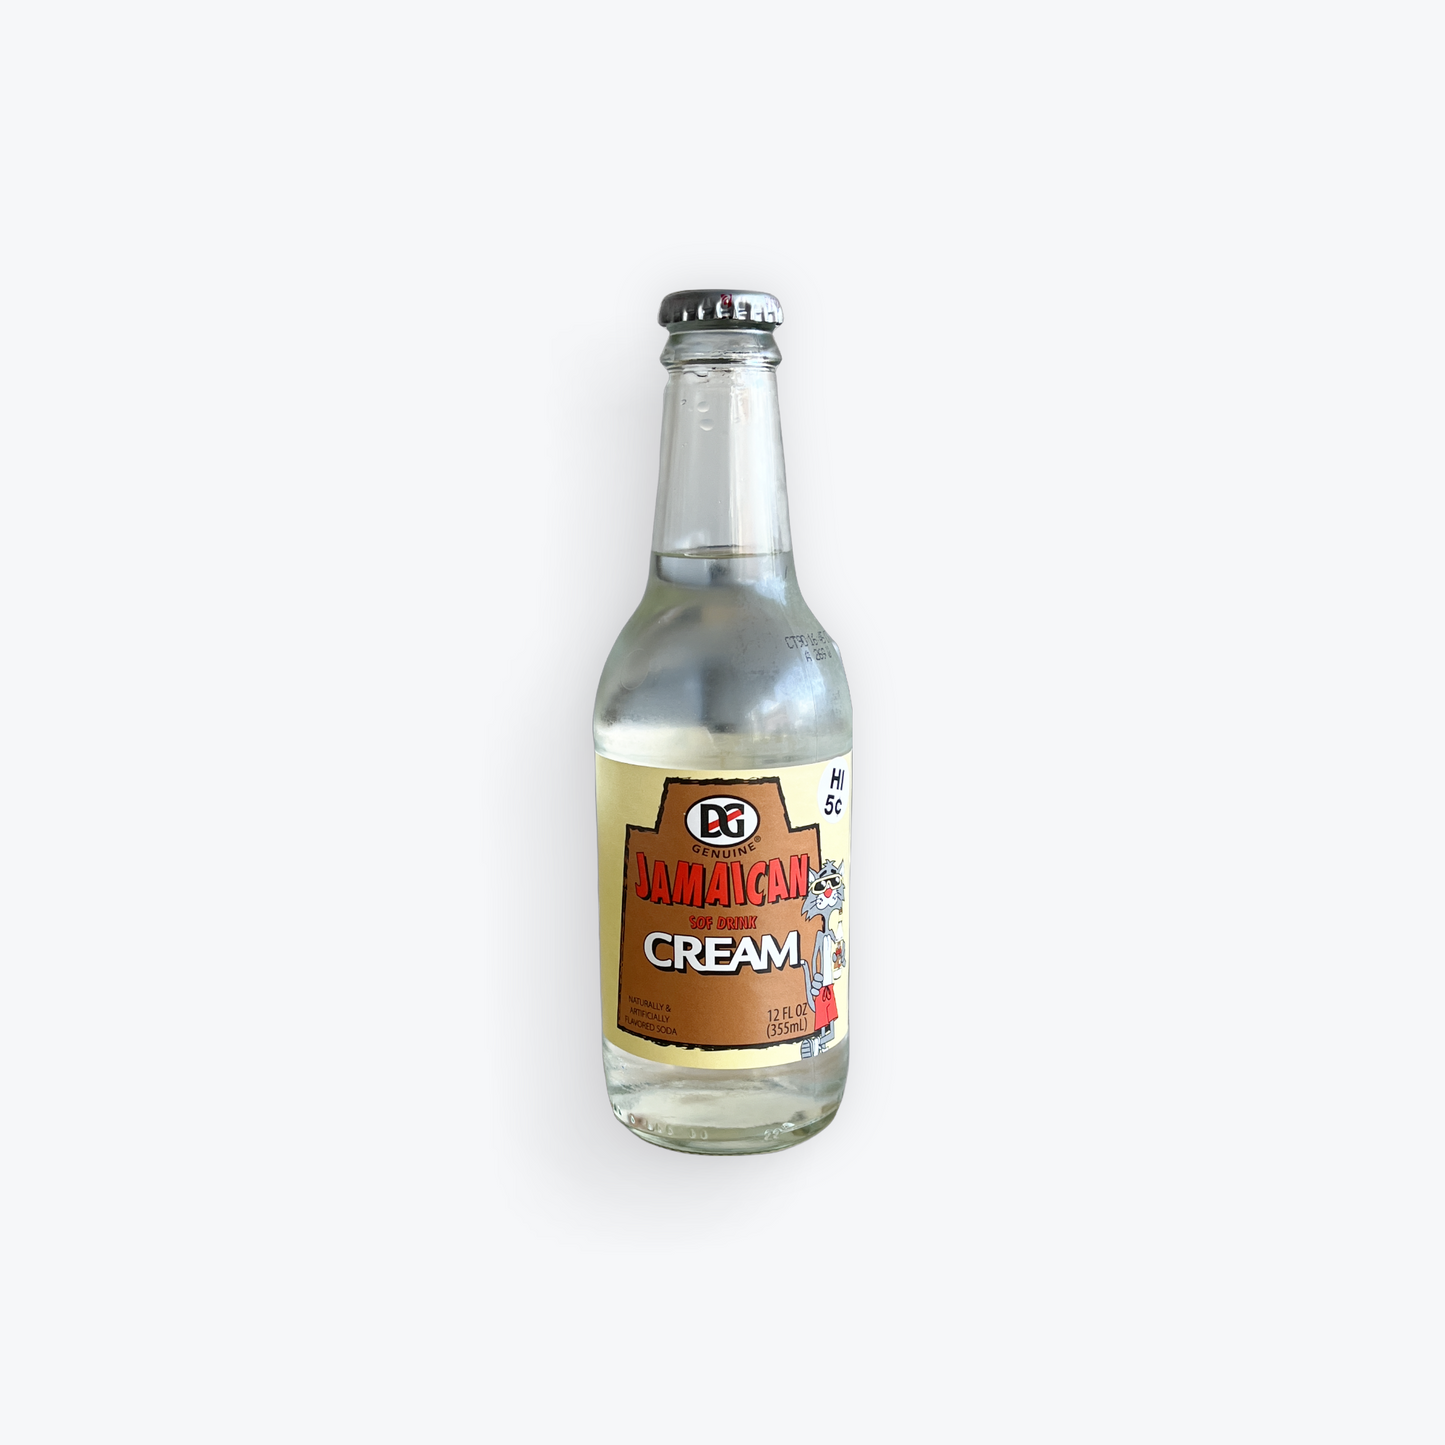 DG Cream Soda, 12 oz